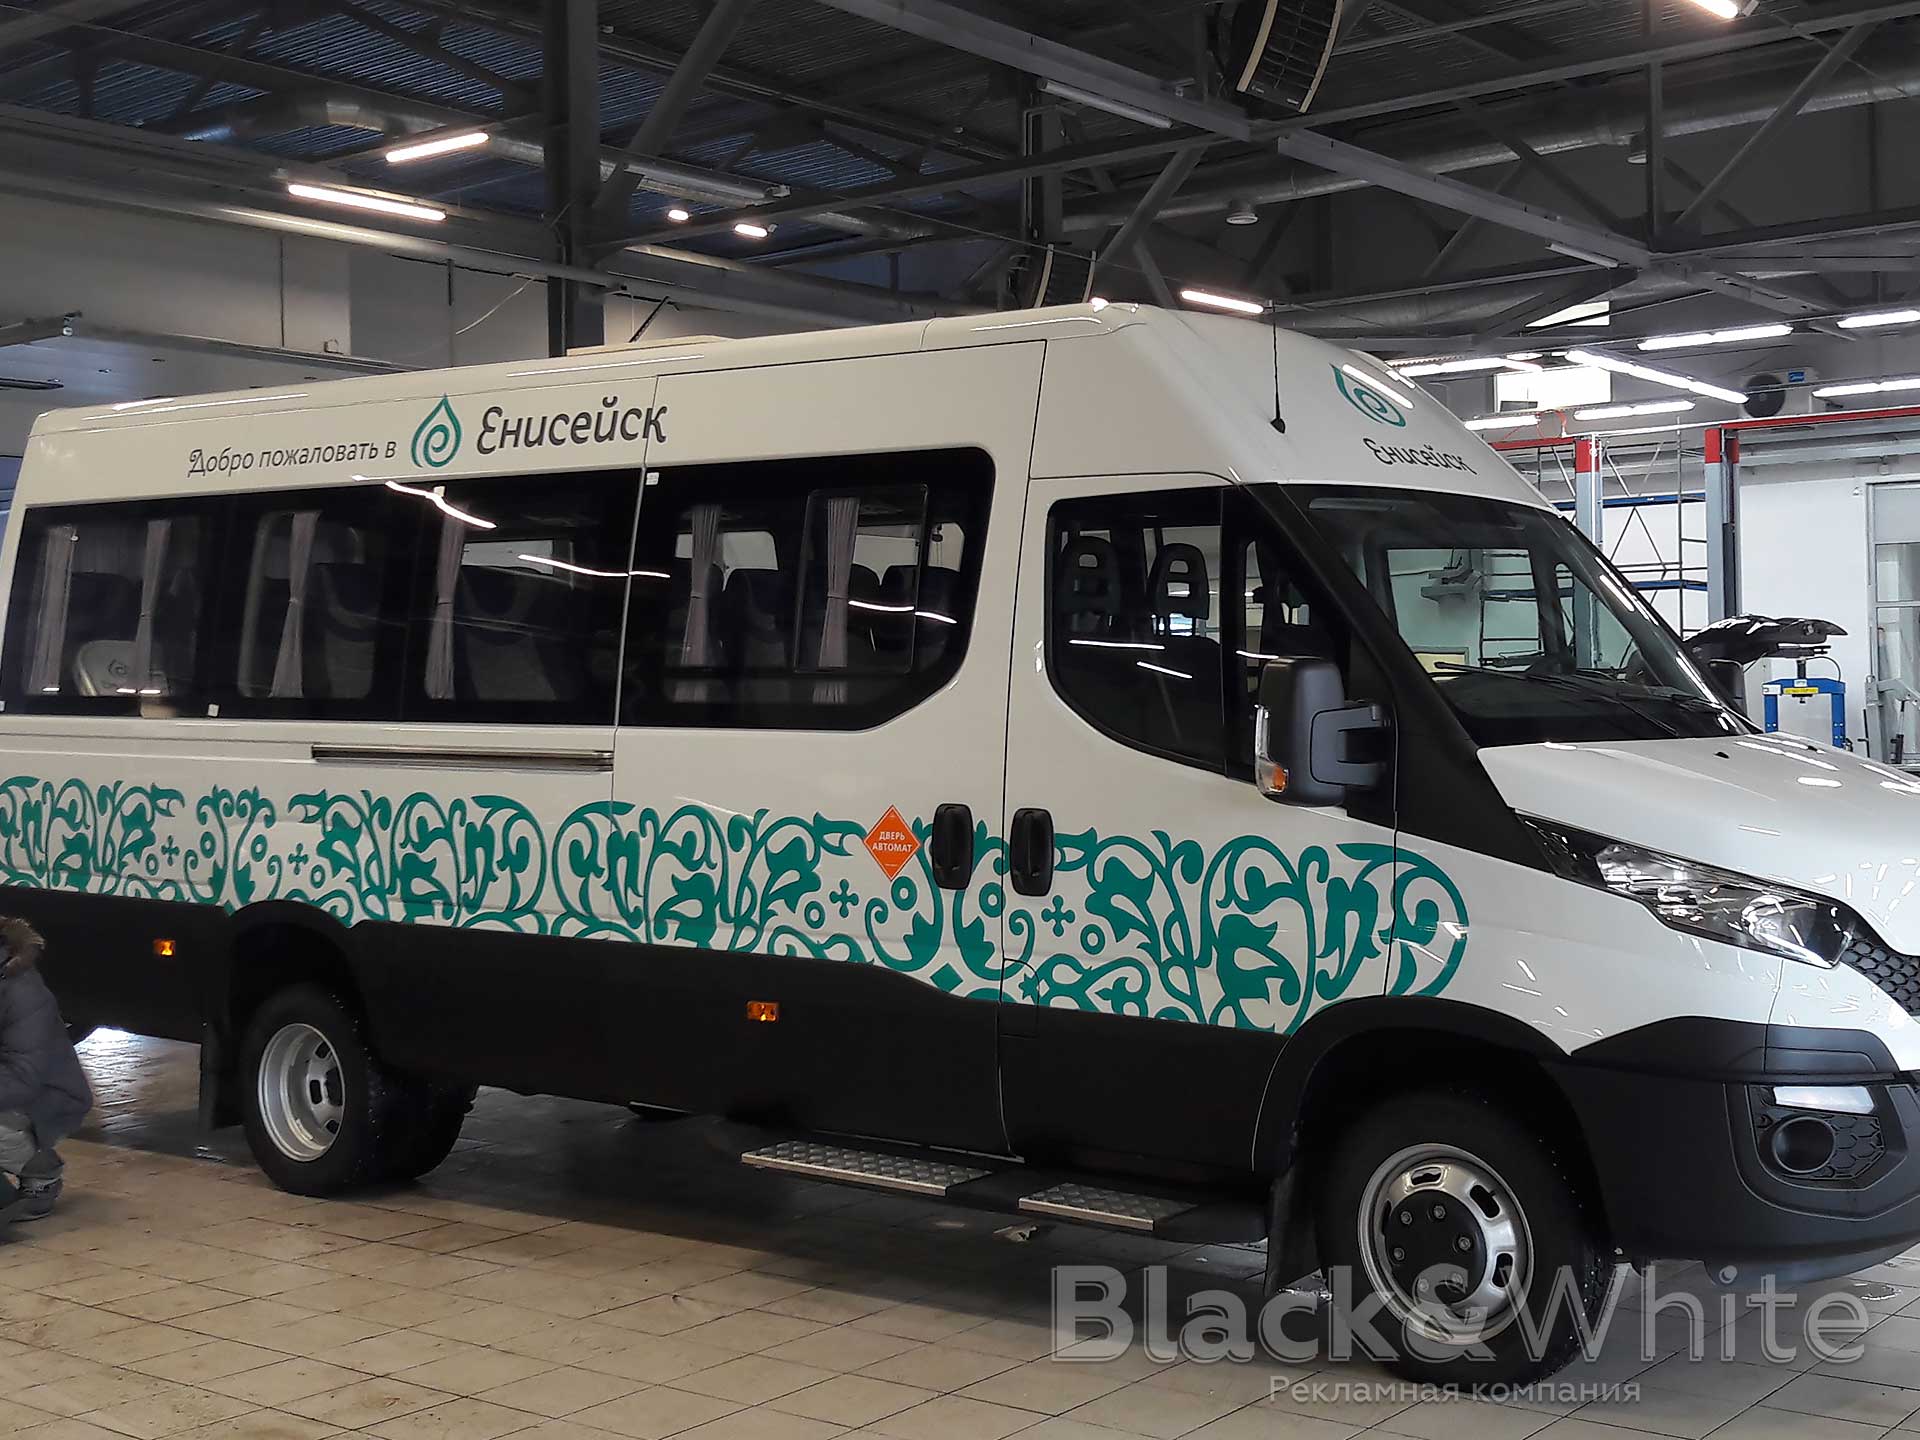 Брендирование-автобусов-Black&White-реклама-на-пассажирских-автобусах-в-Красноярске.jpg